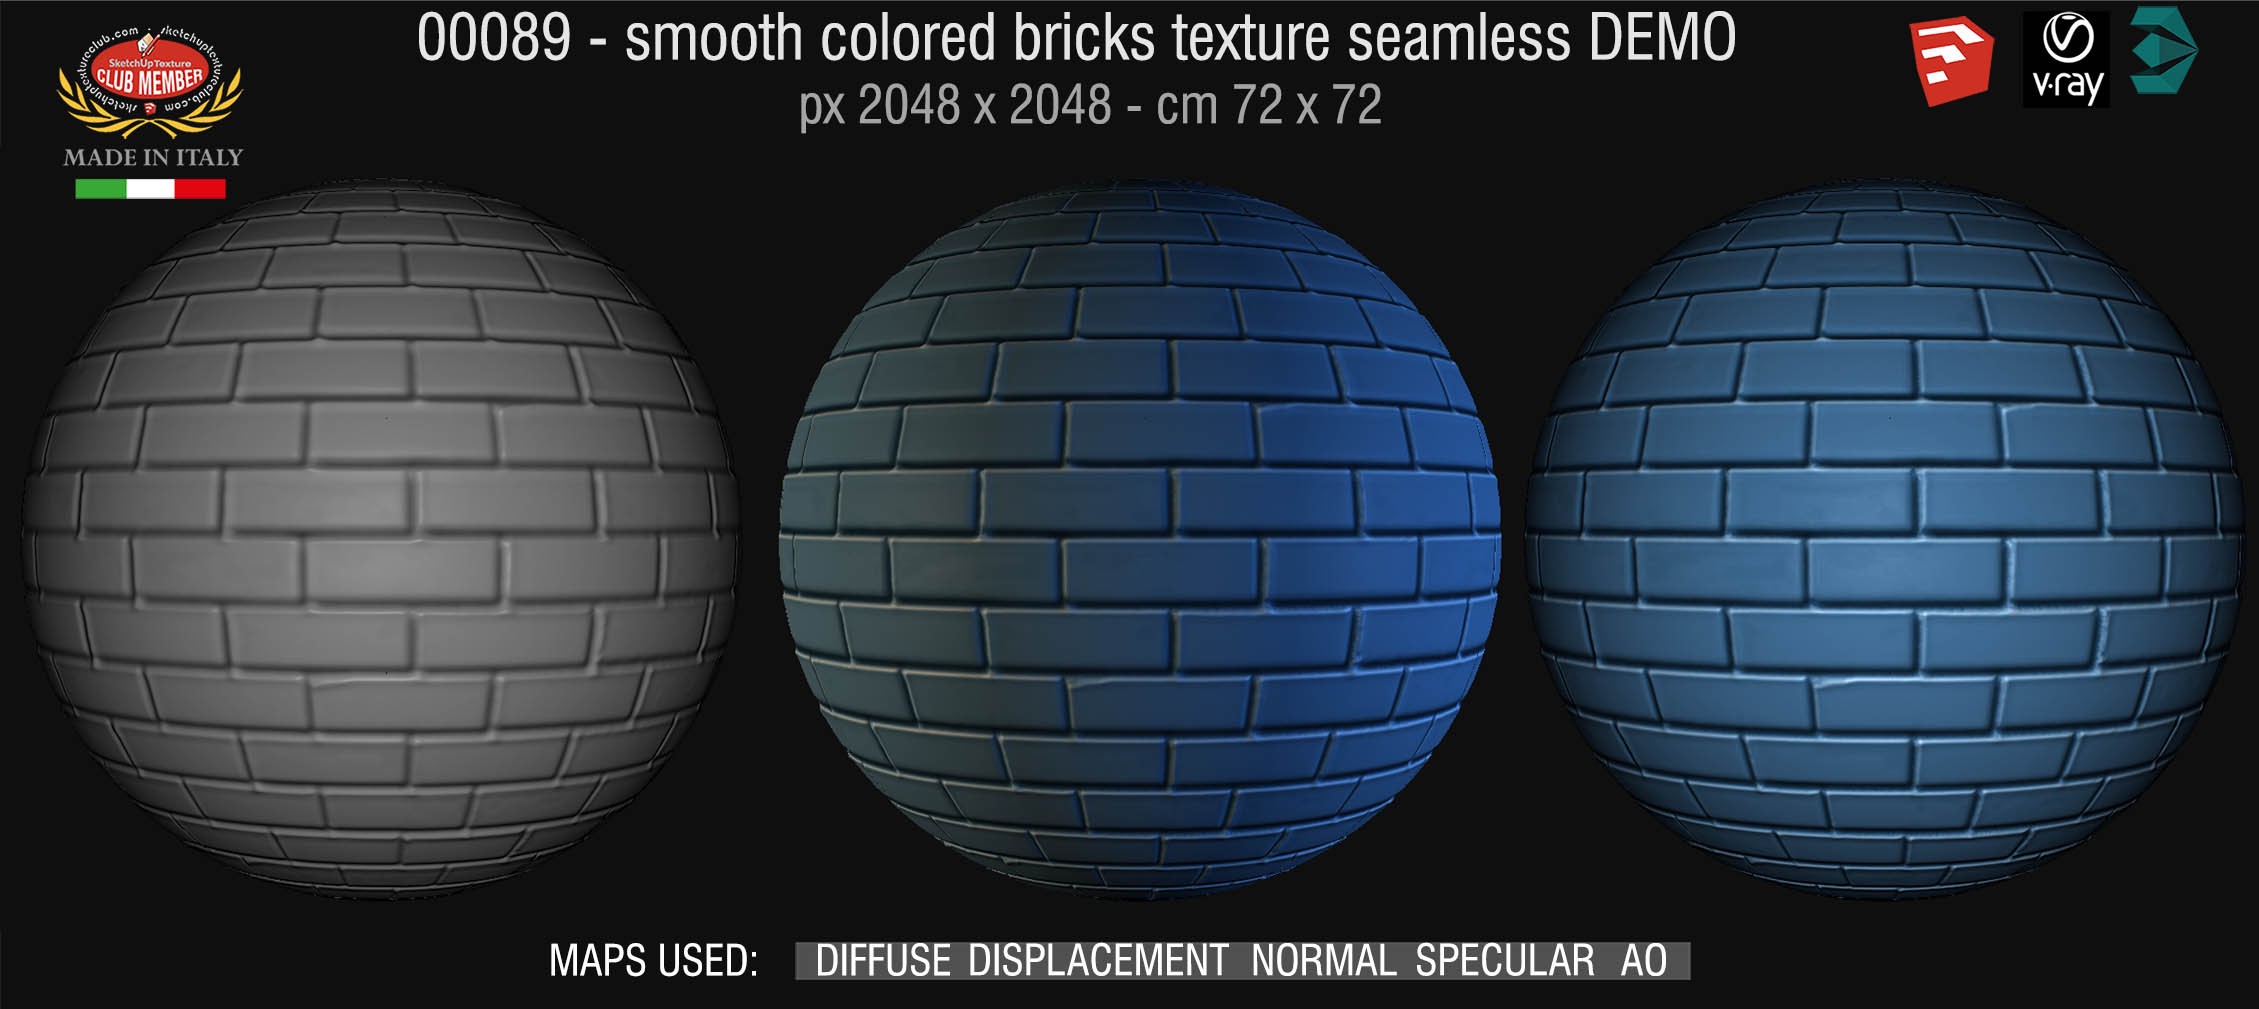 00089 smooth colored bricks texture seamless + maps DEMO